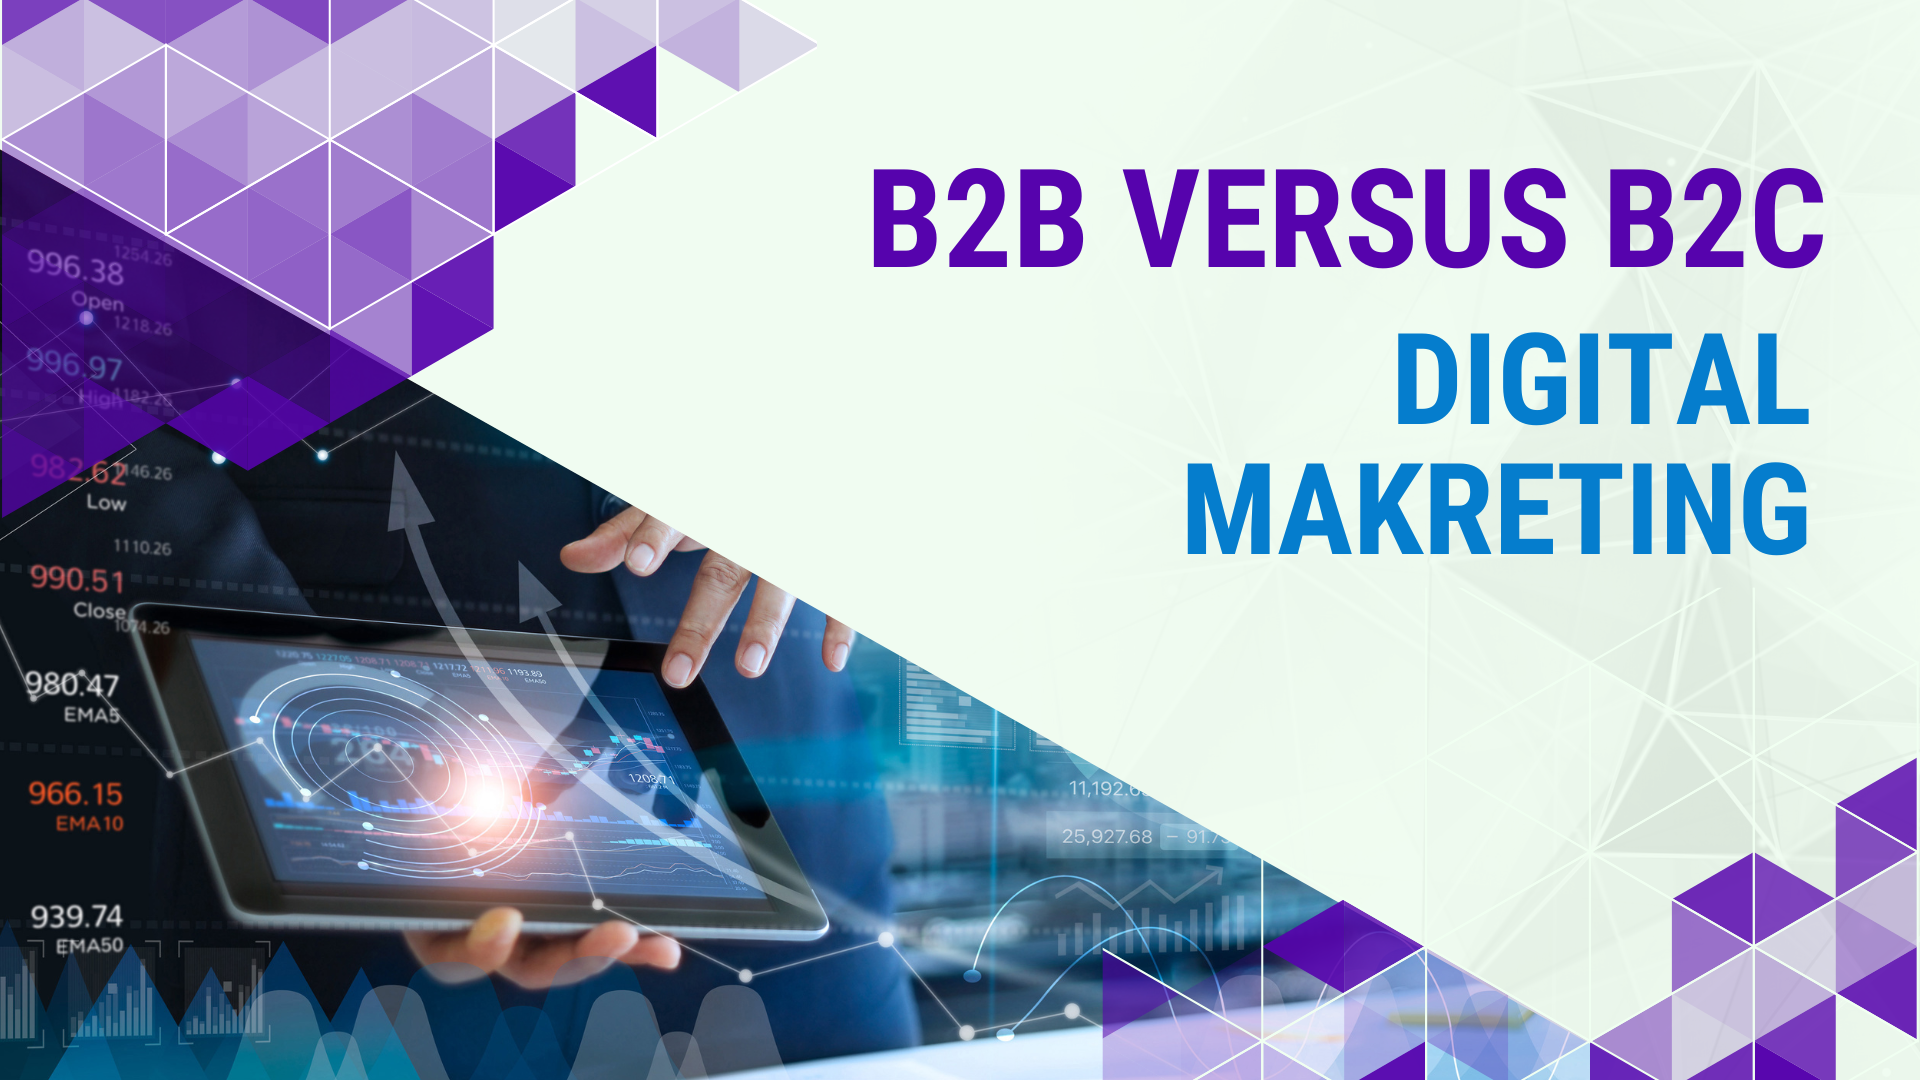 B2B versus B2C Digital Marketing